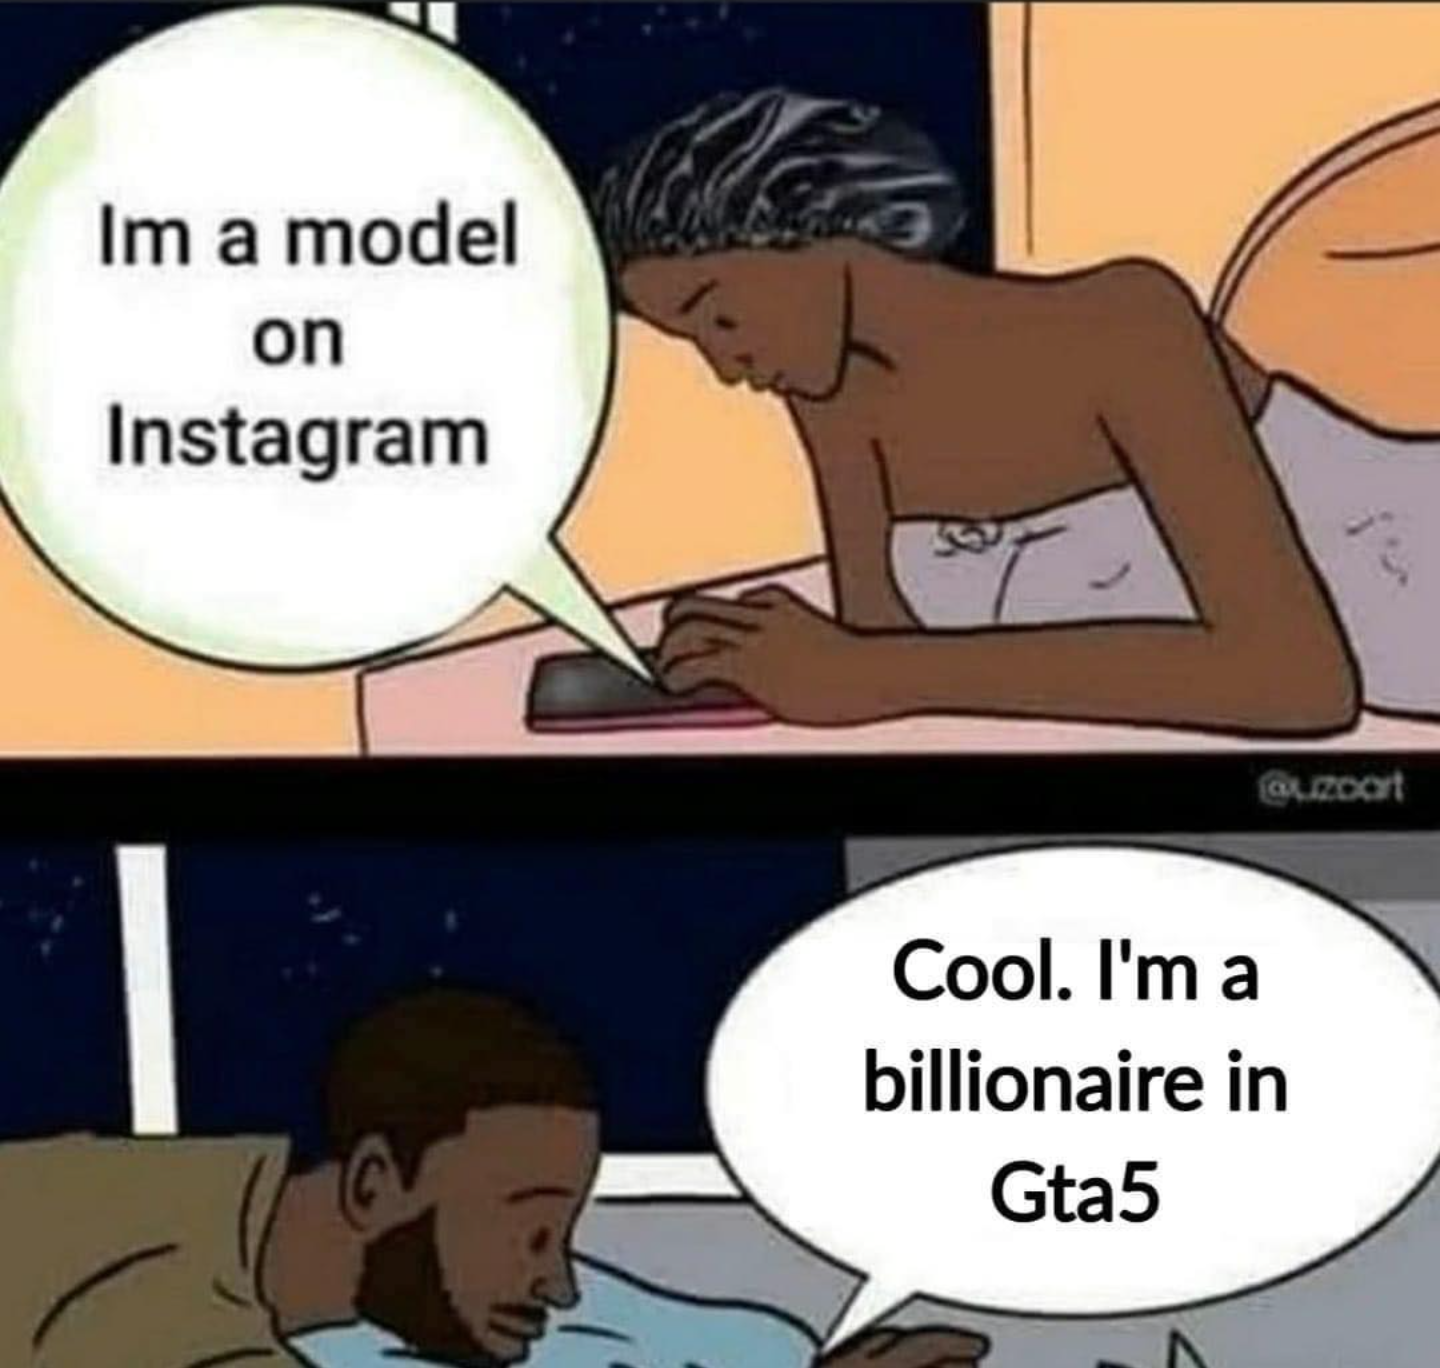 9gag field marshall - Im a model on Instagram Cool. I'm a billionaire in Gta5